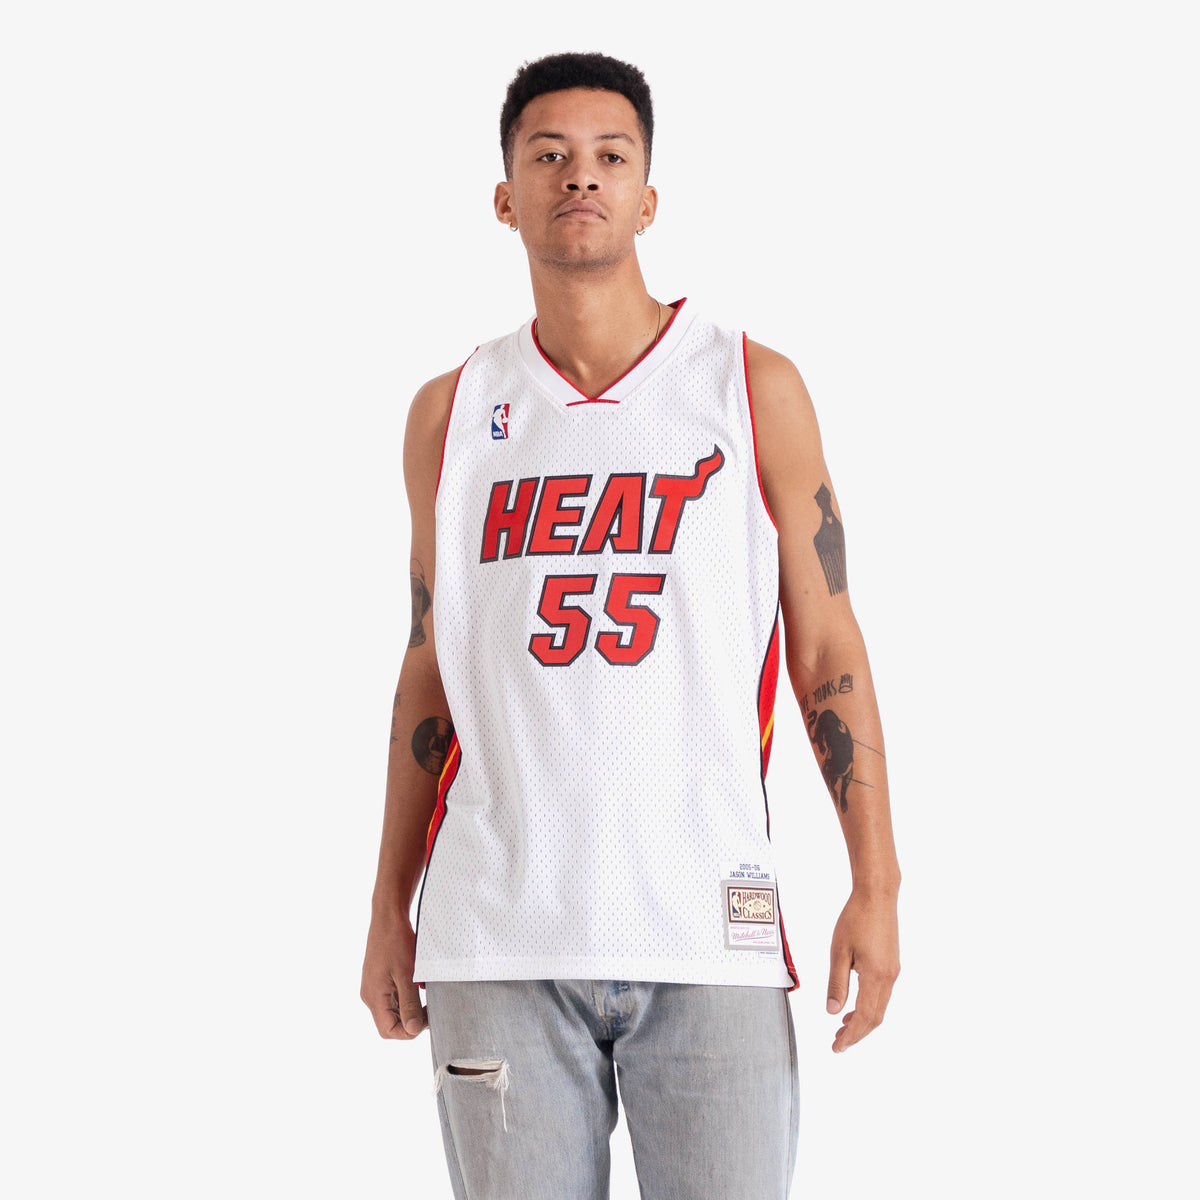 Wholesale Jason Williams #55 basketball jersey heat transfer james